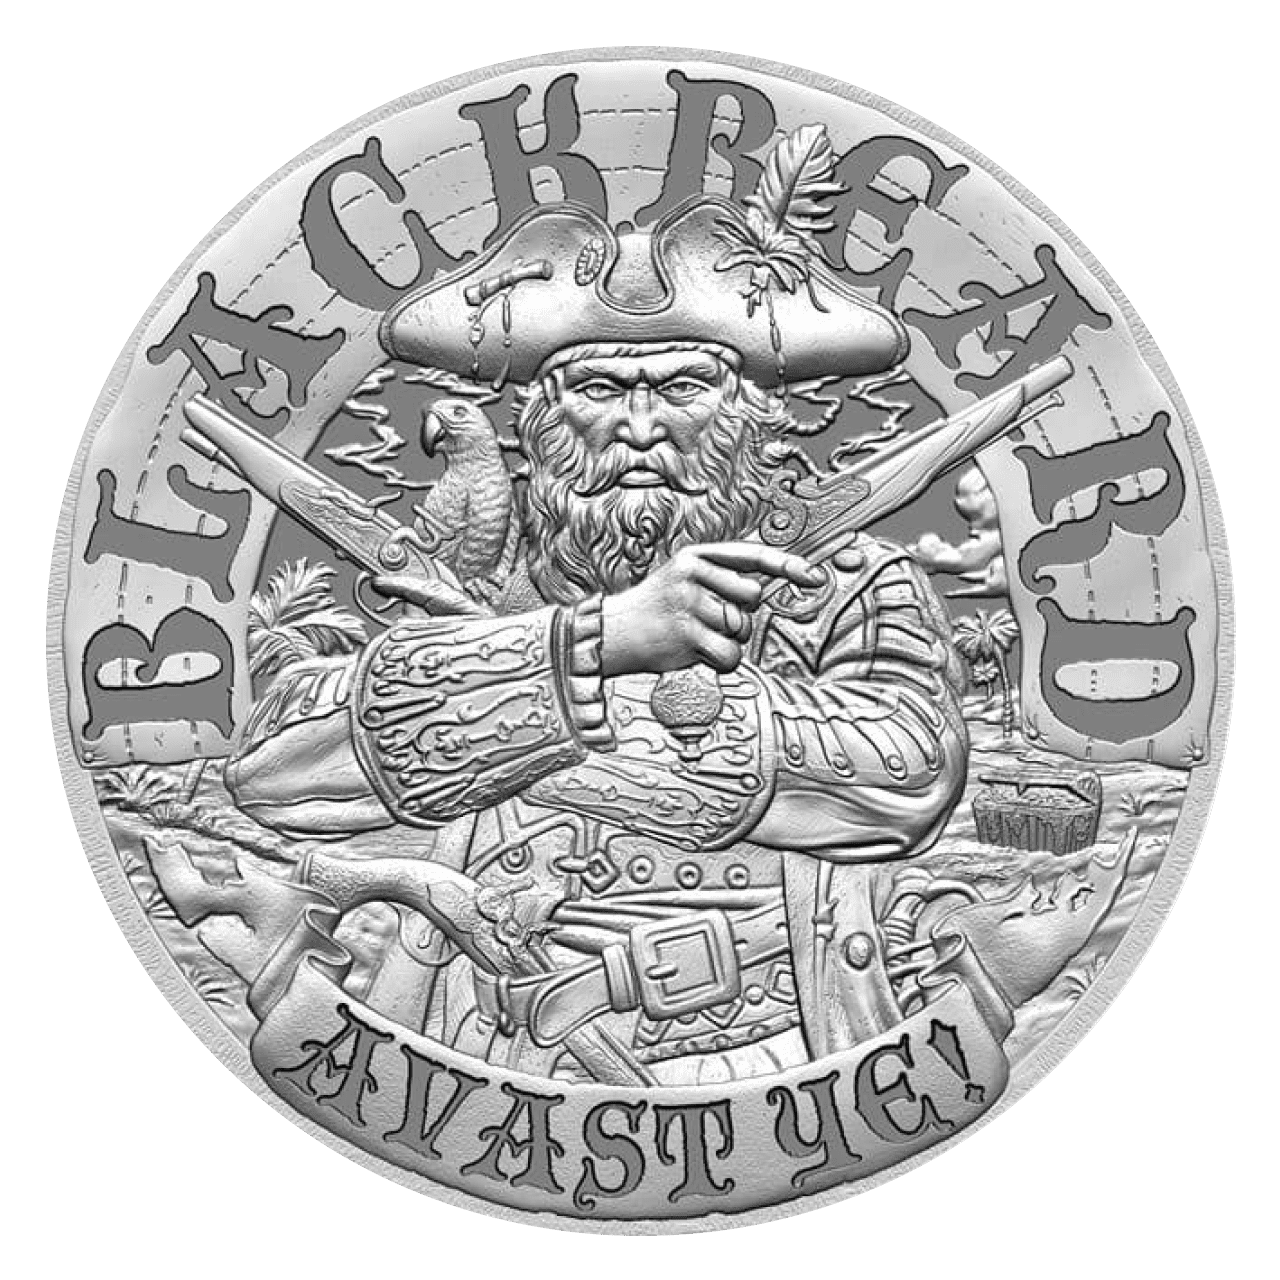 Blackbeard 1 oz Silver Round - Pirate Series (.999 Fine)